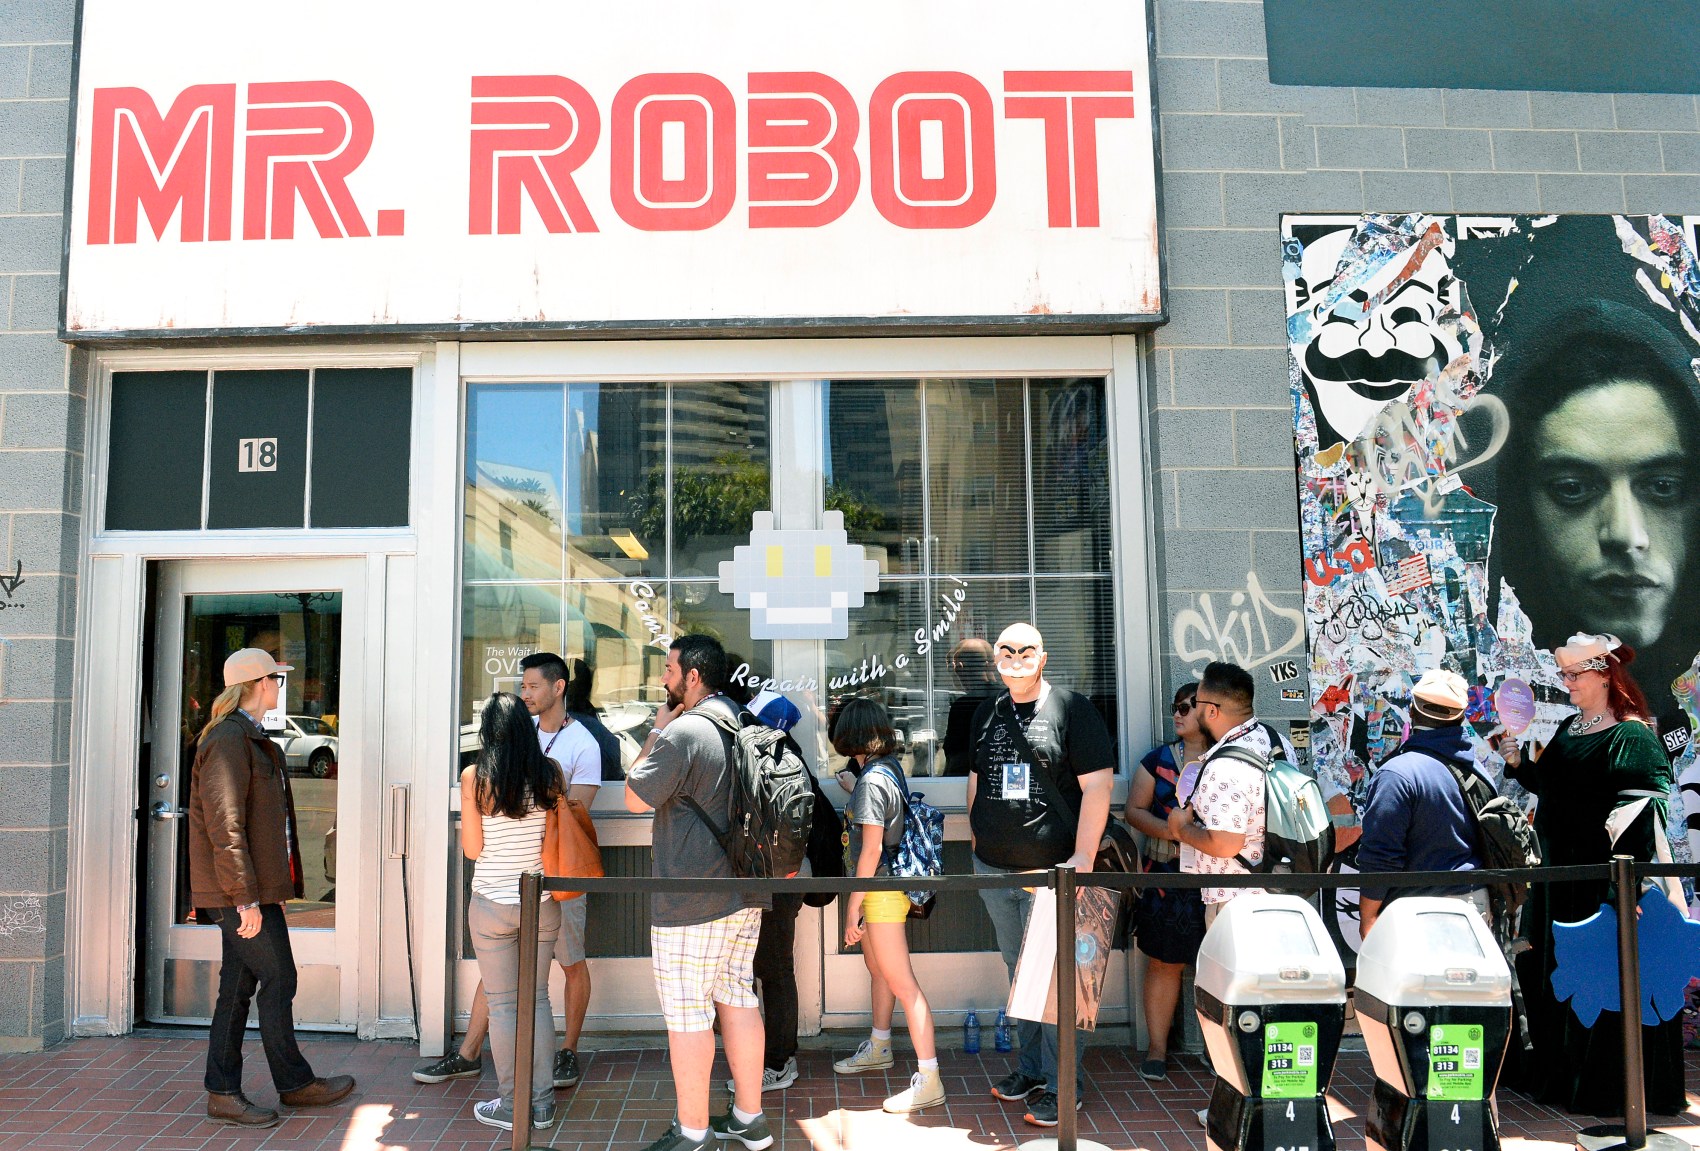 Comic-Con International 2016 - "Mr. Robot" VR Experience